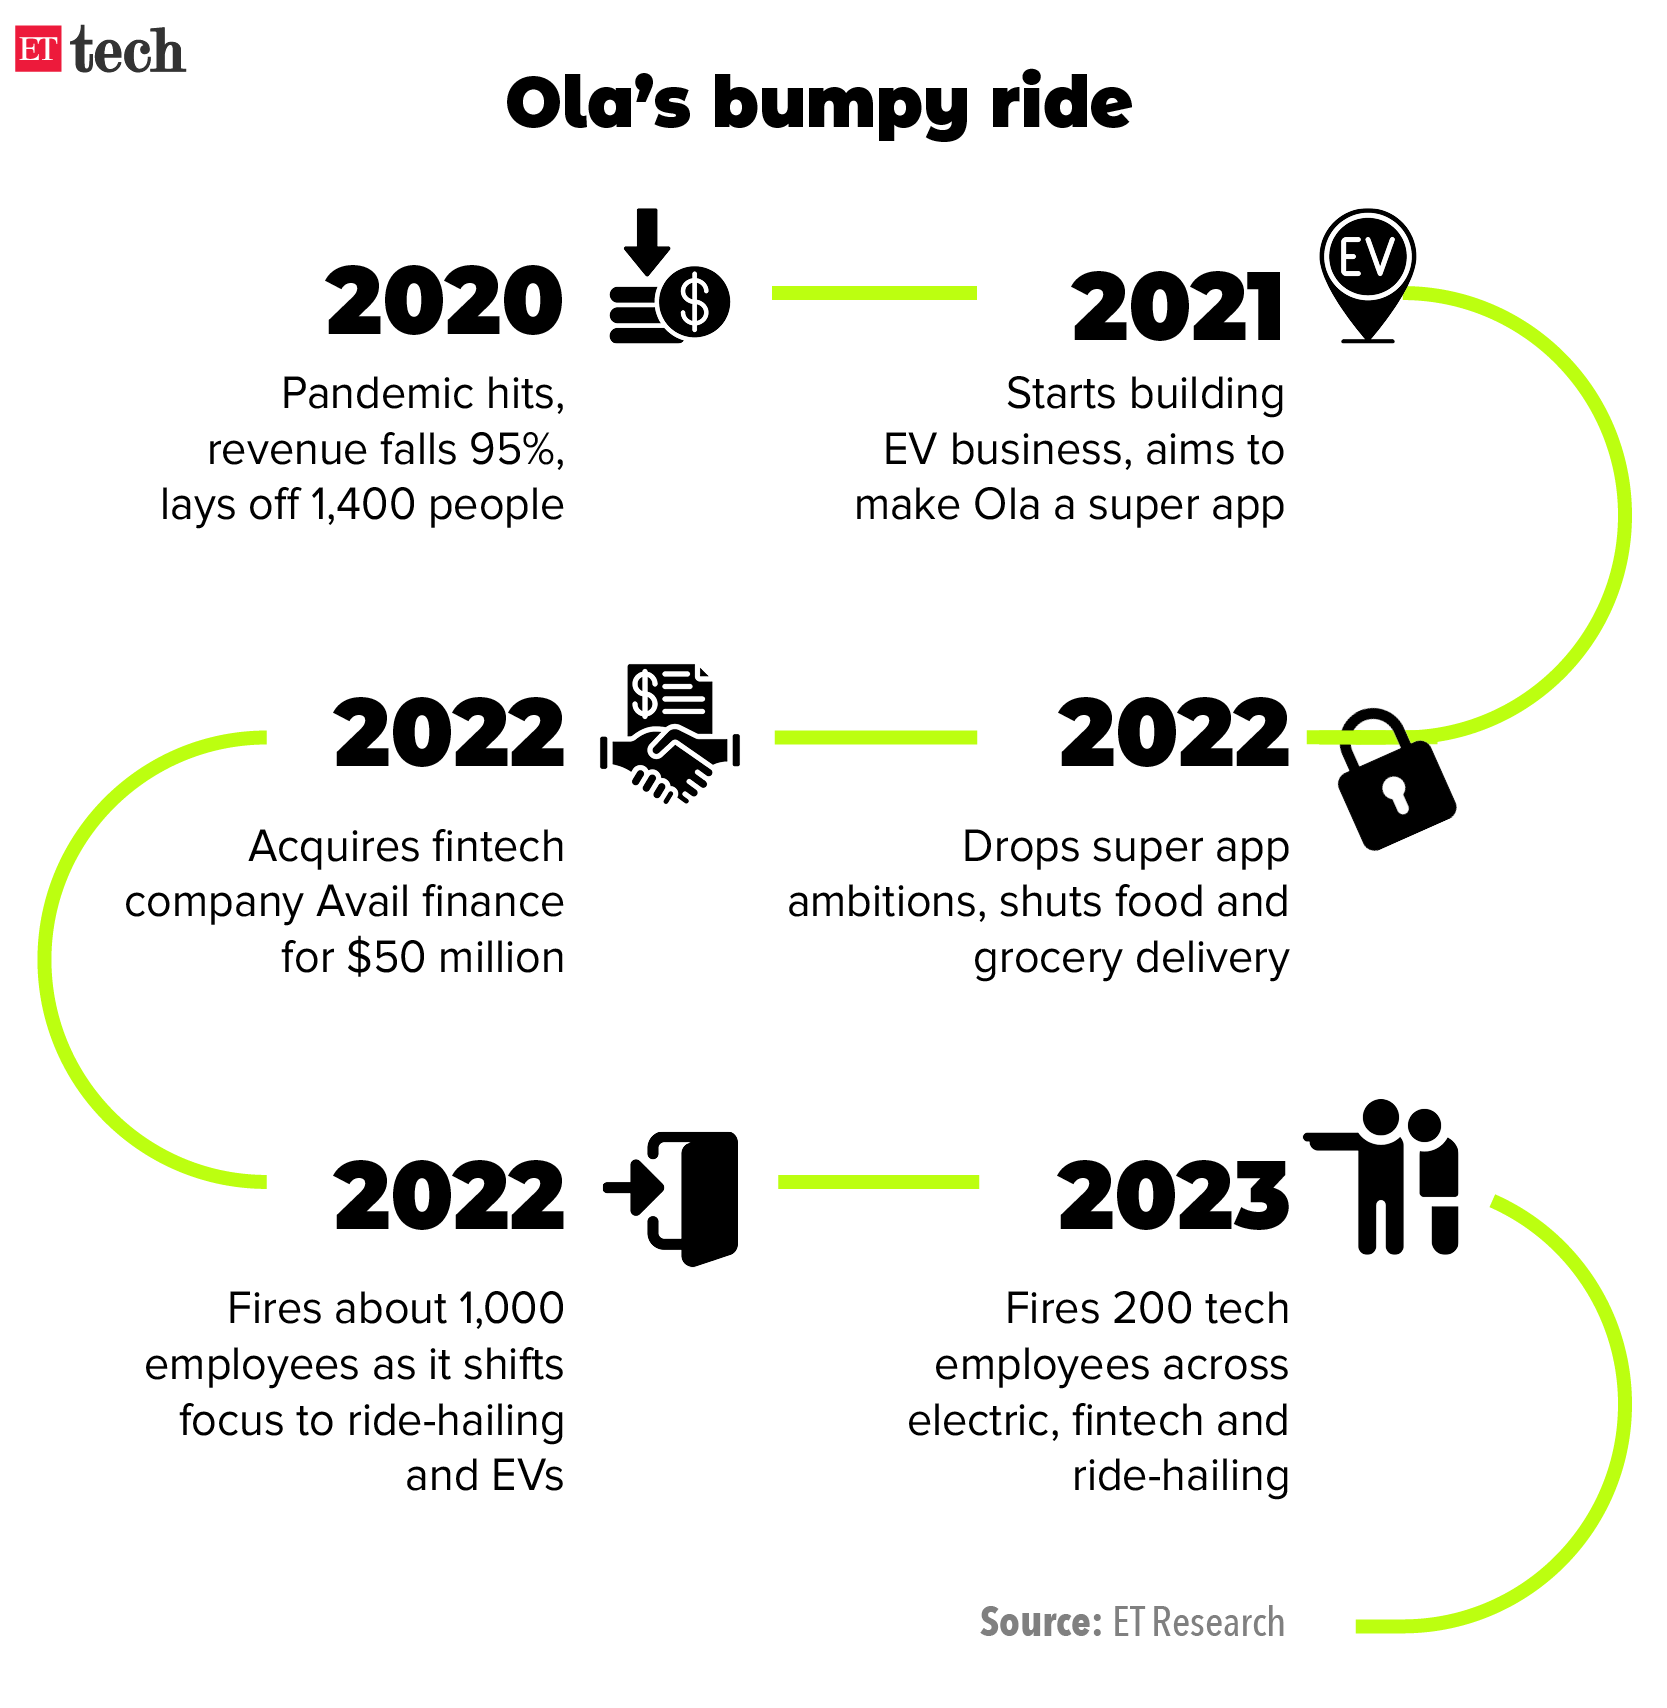 Olas bumpy ride-Timeline_Graphic_ETTECH_1